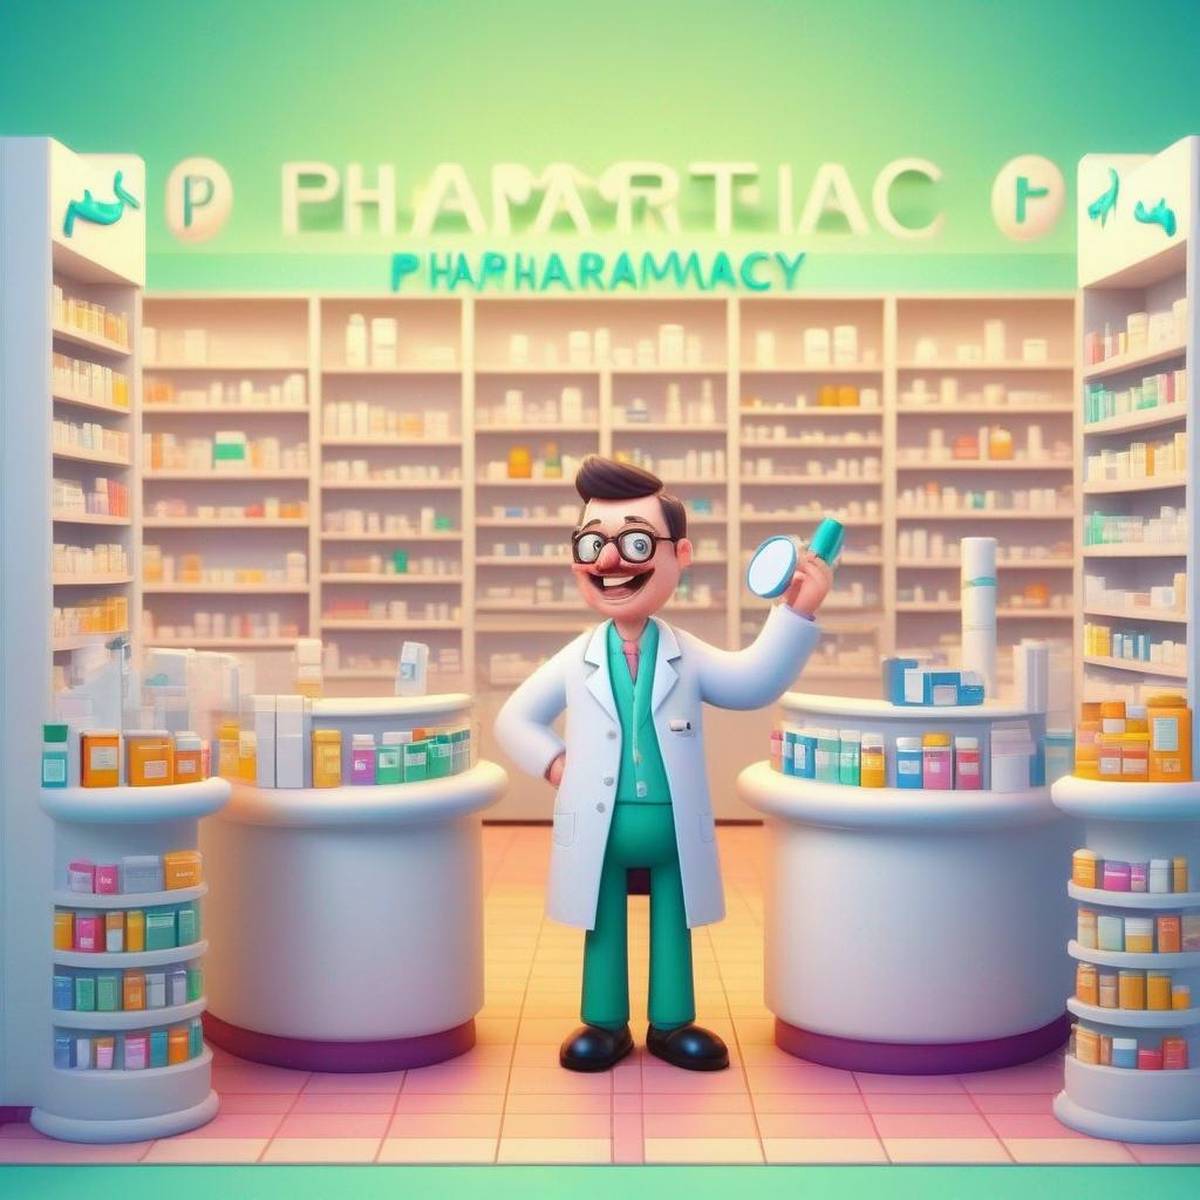 Pharmacy puns